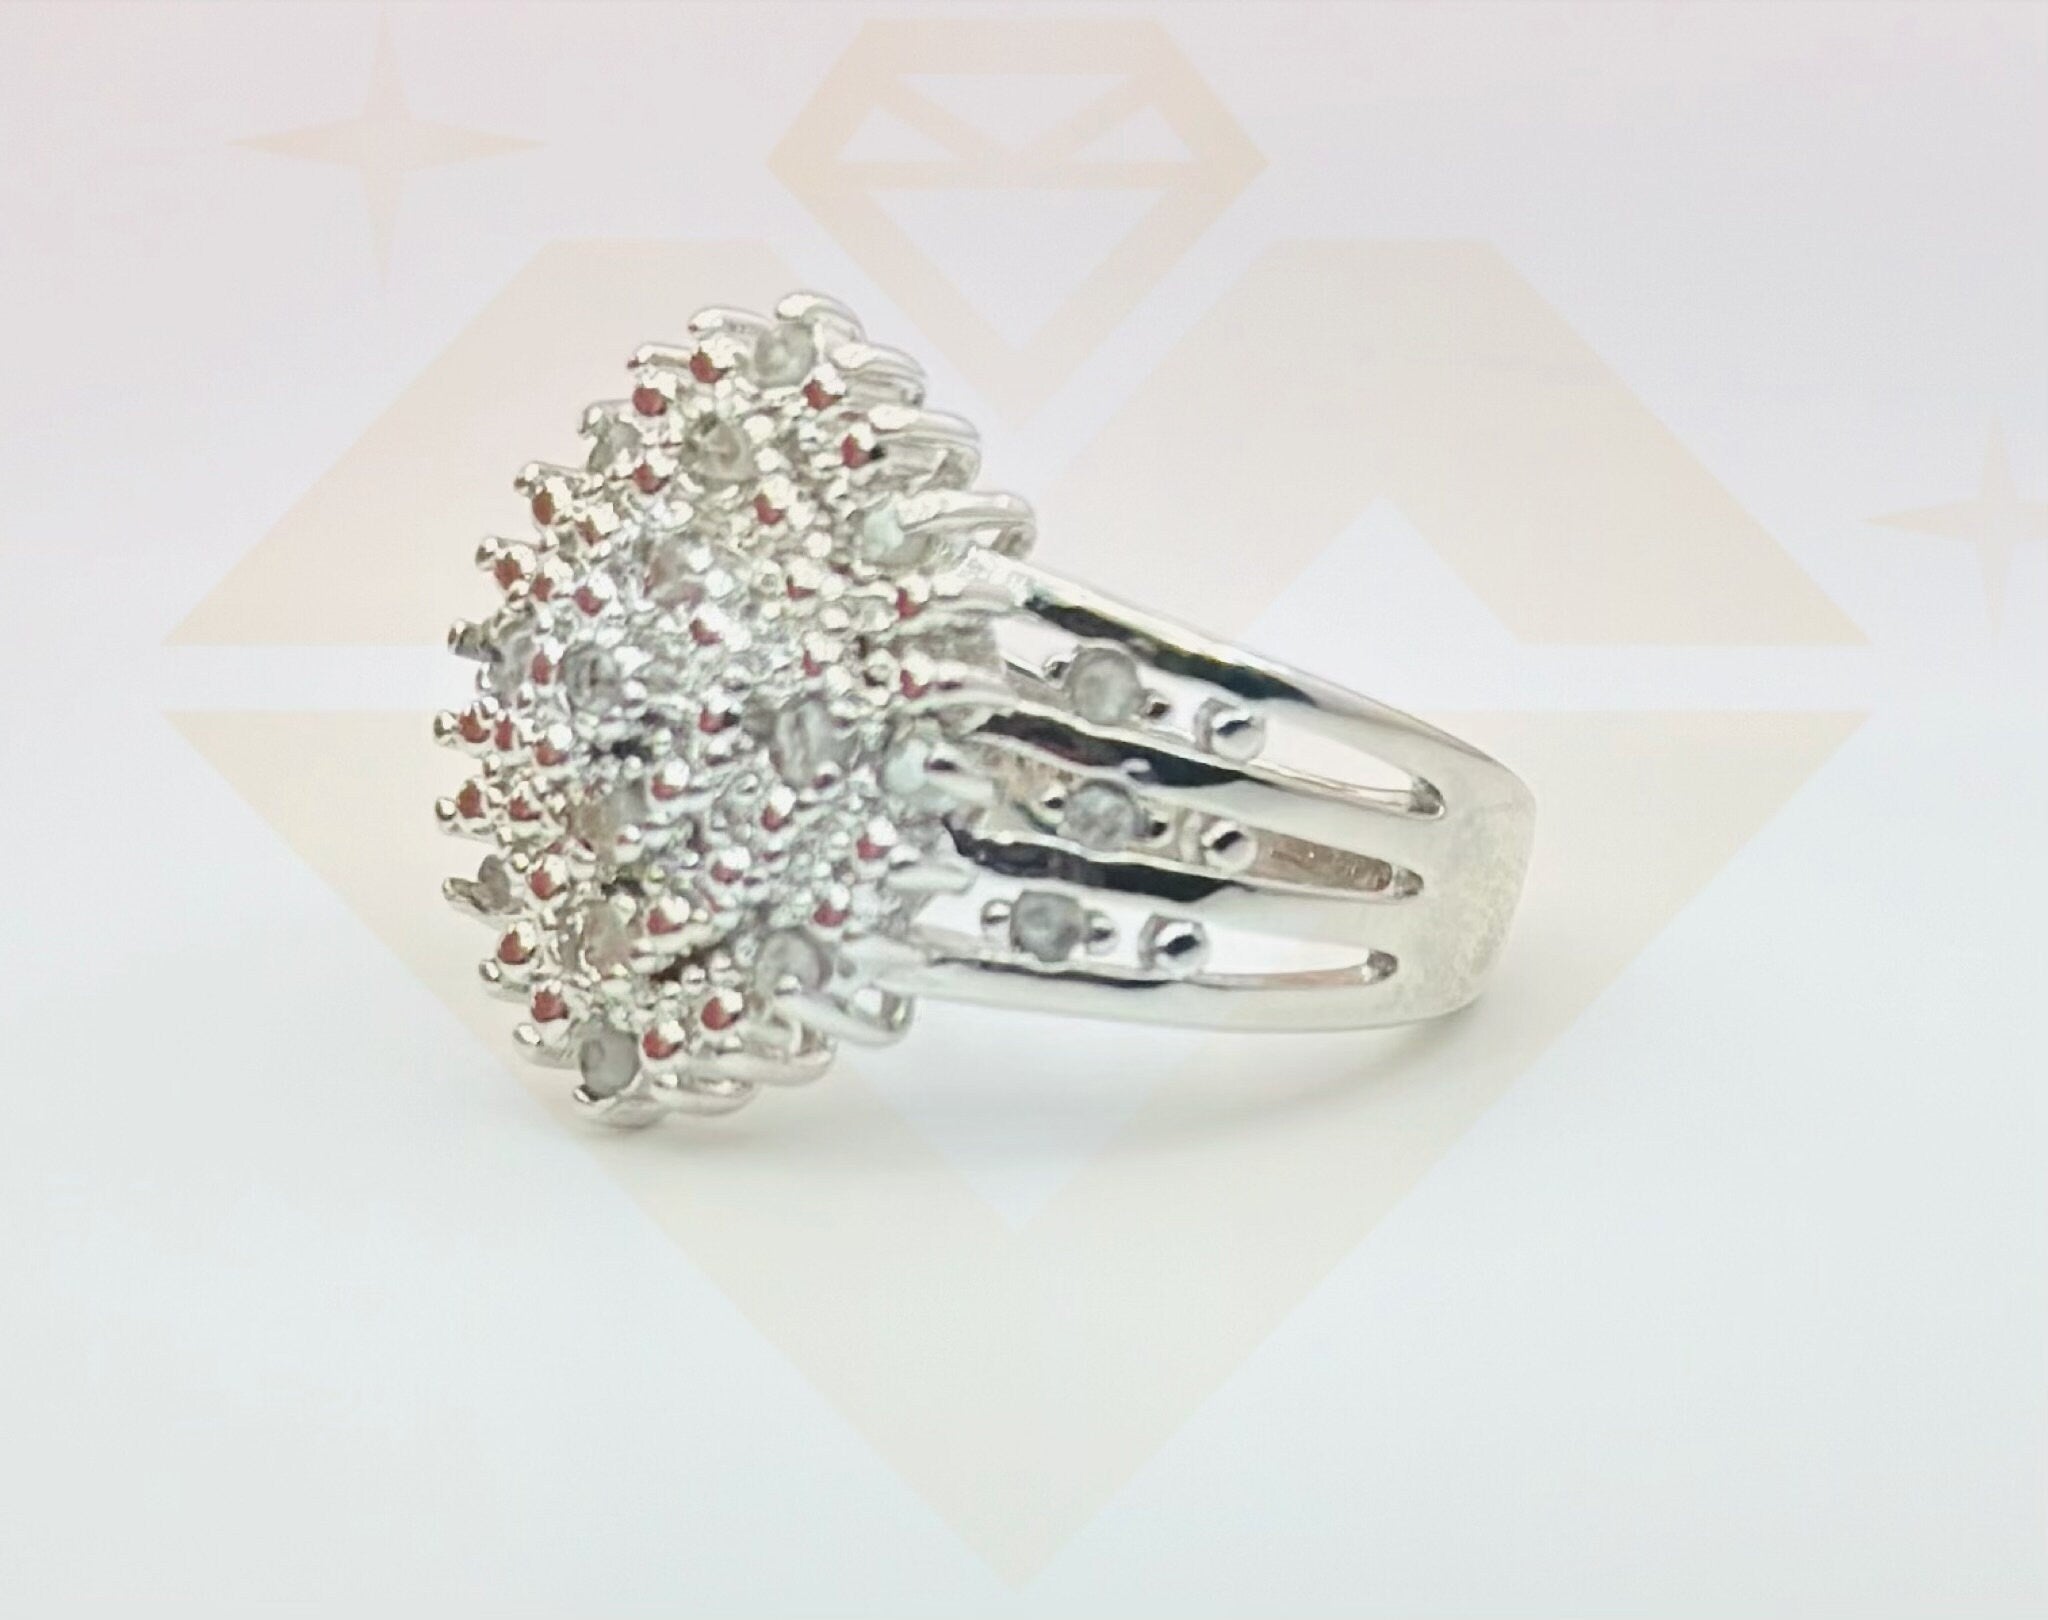 Real Diamond Elegant gift ring for her 14k white gold vermeil genuine diamond ring, Engagement Promise Wedding Bridal Jewelry ring Christmas